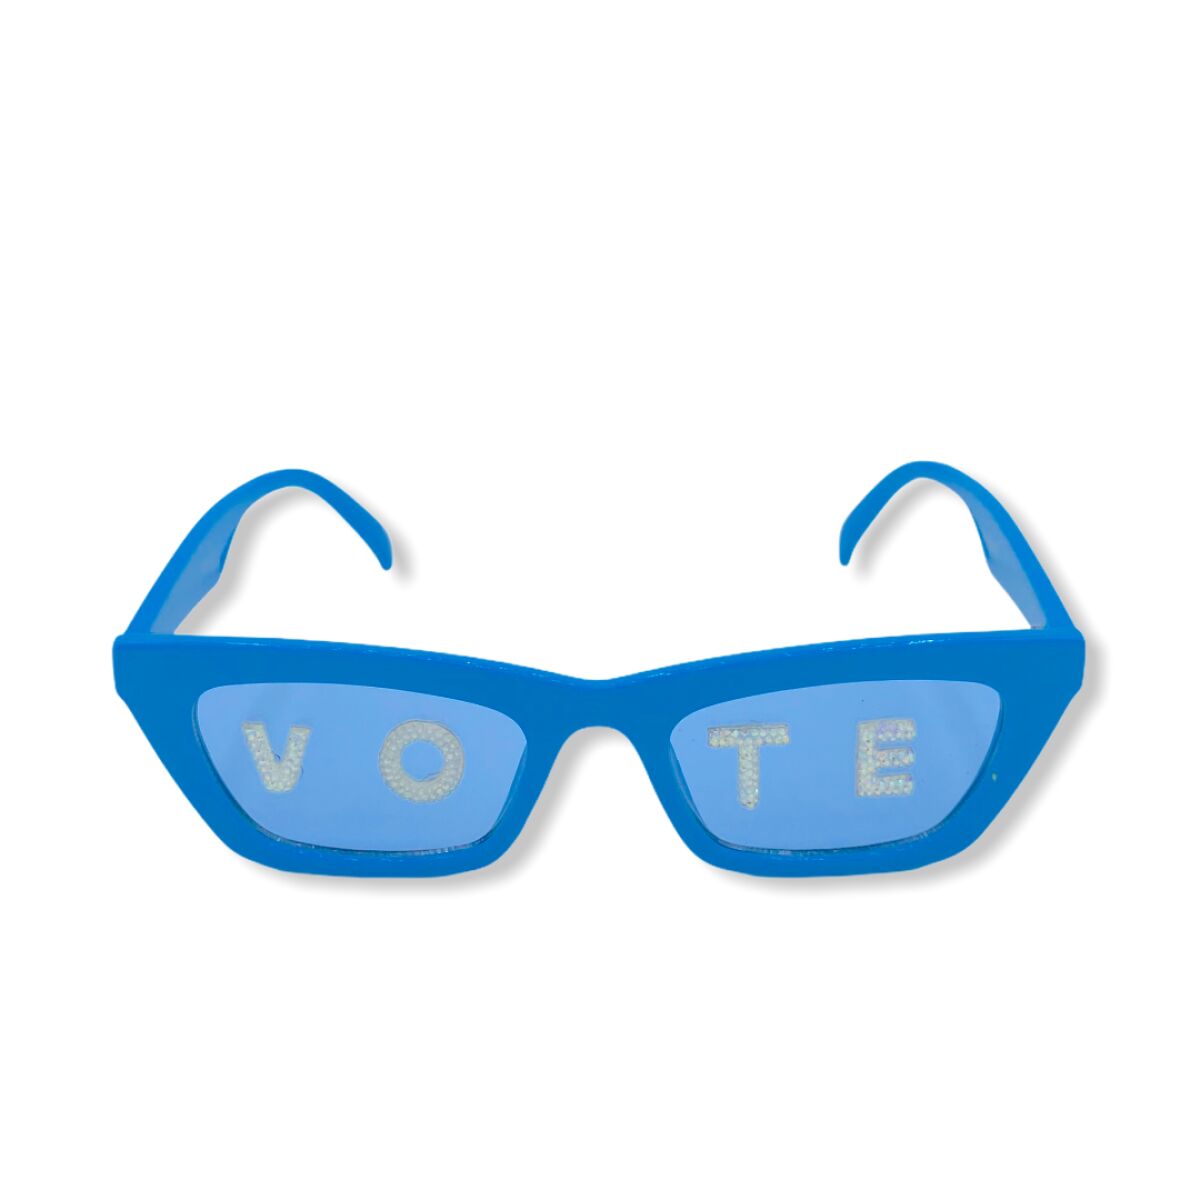 A photo of Rad + Refined colorful vote-themed sunglasses.